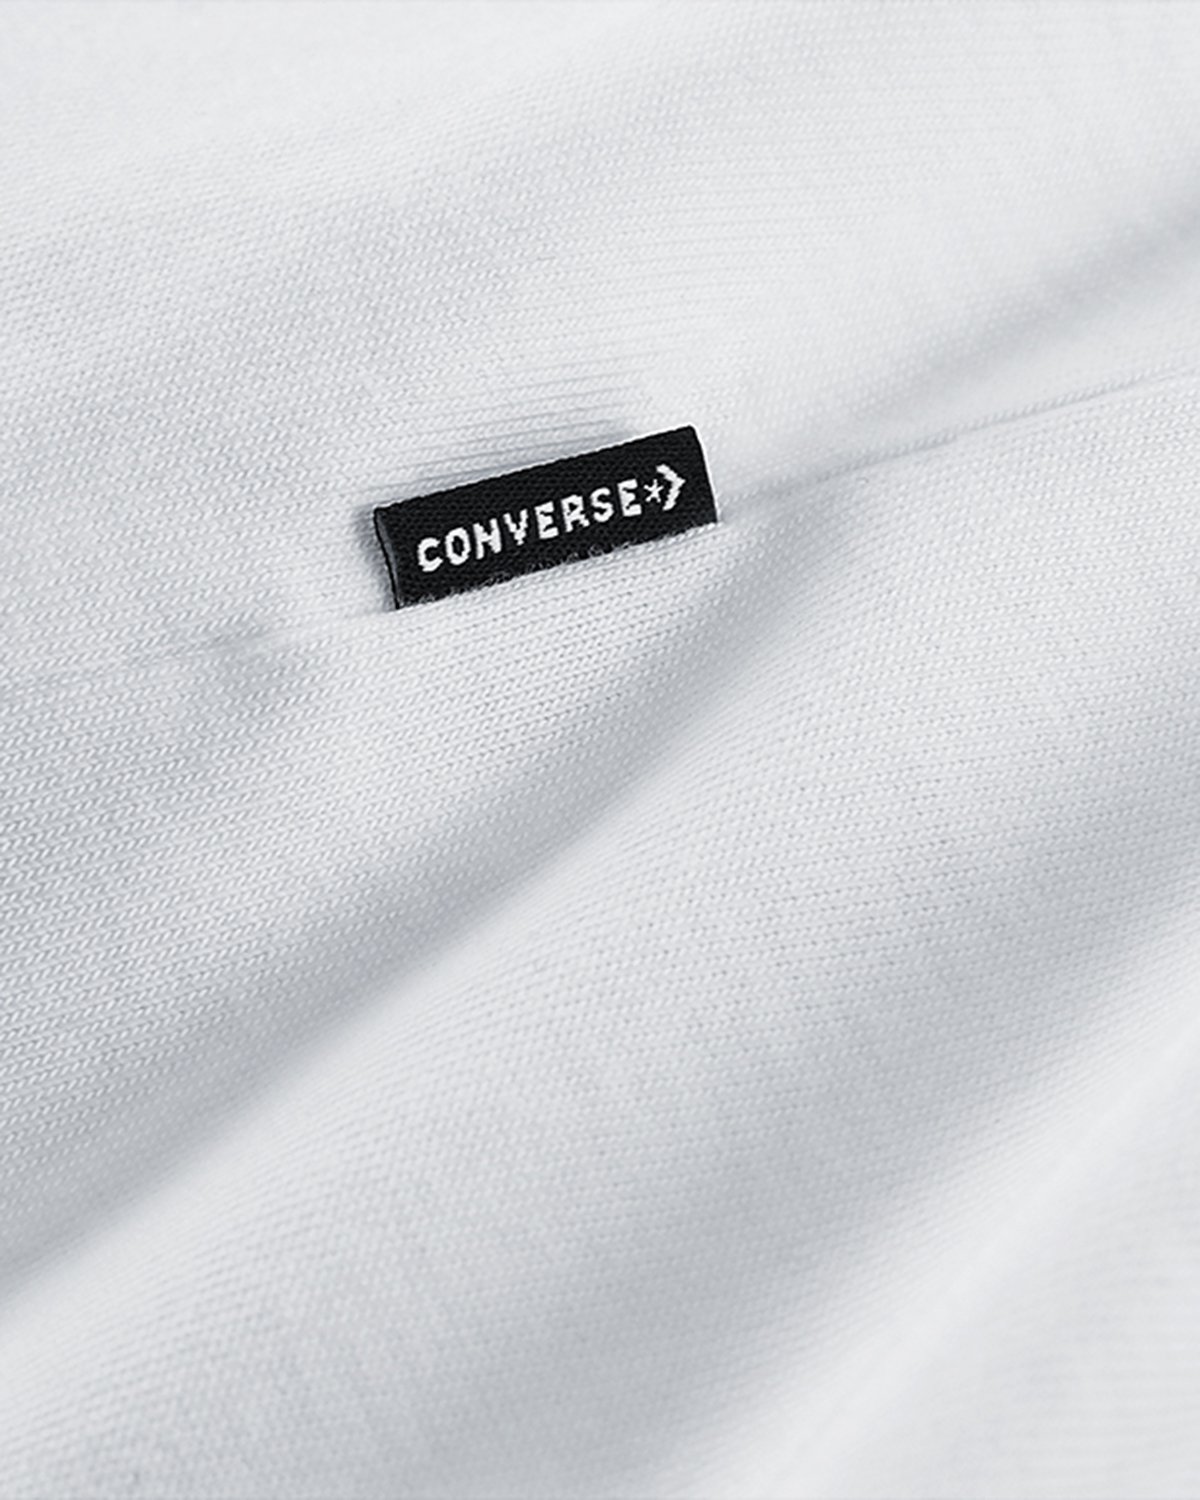 Converse x Kim Jones - T-Shirt White - Clothing - White - Image 4